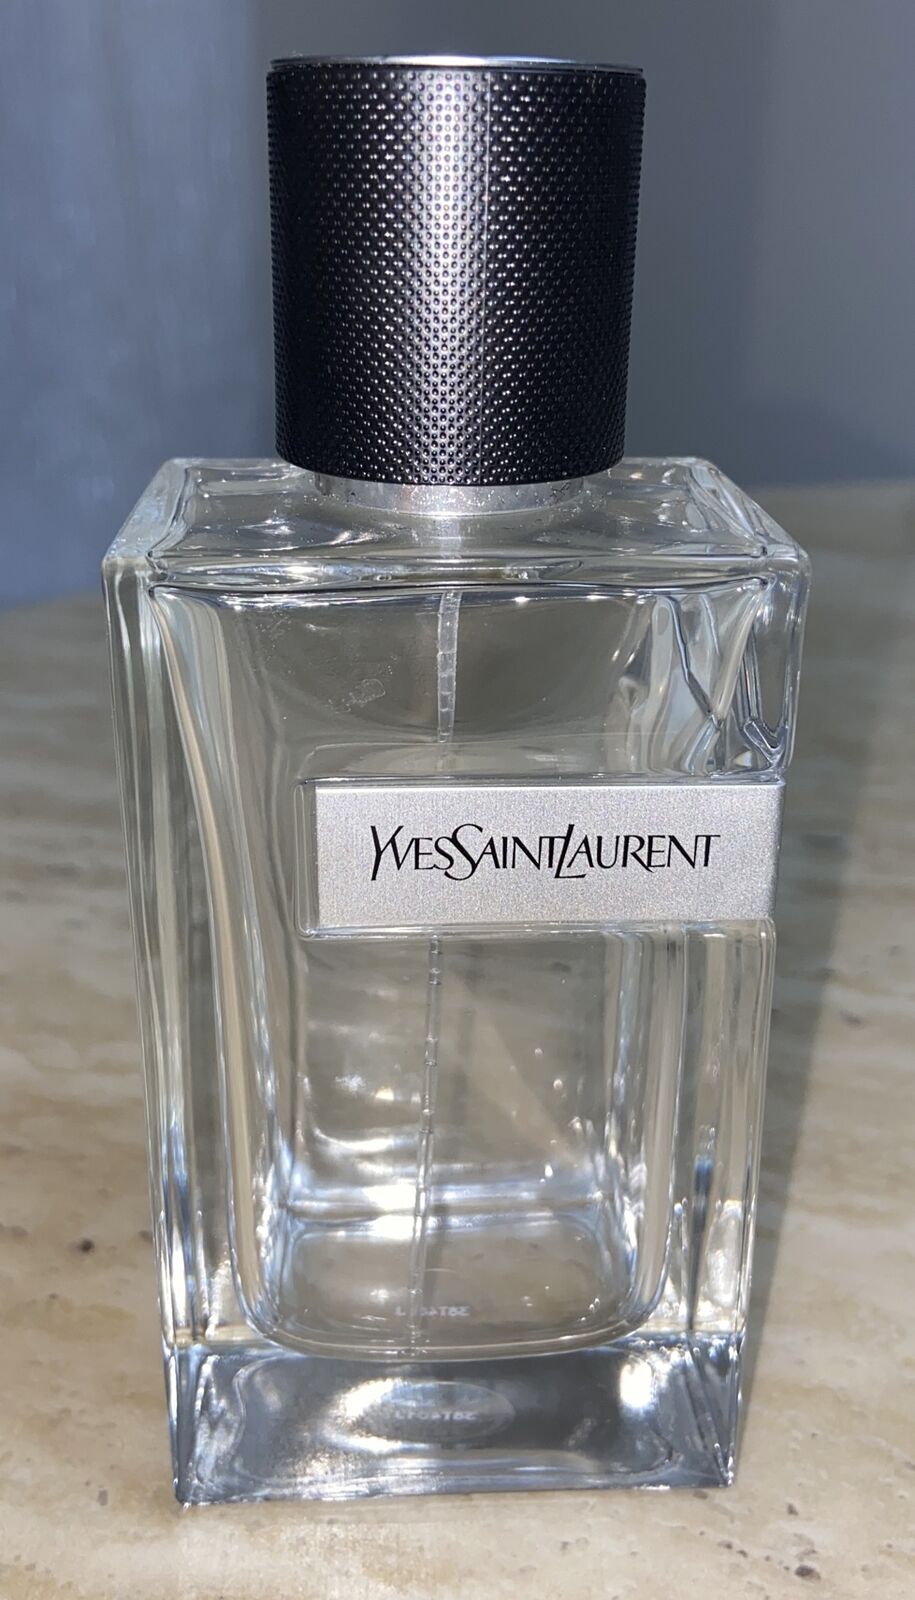 Yves Saint Laurent (empty bottle)